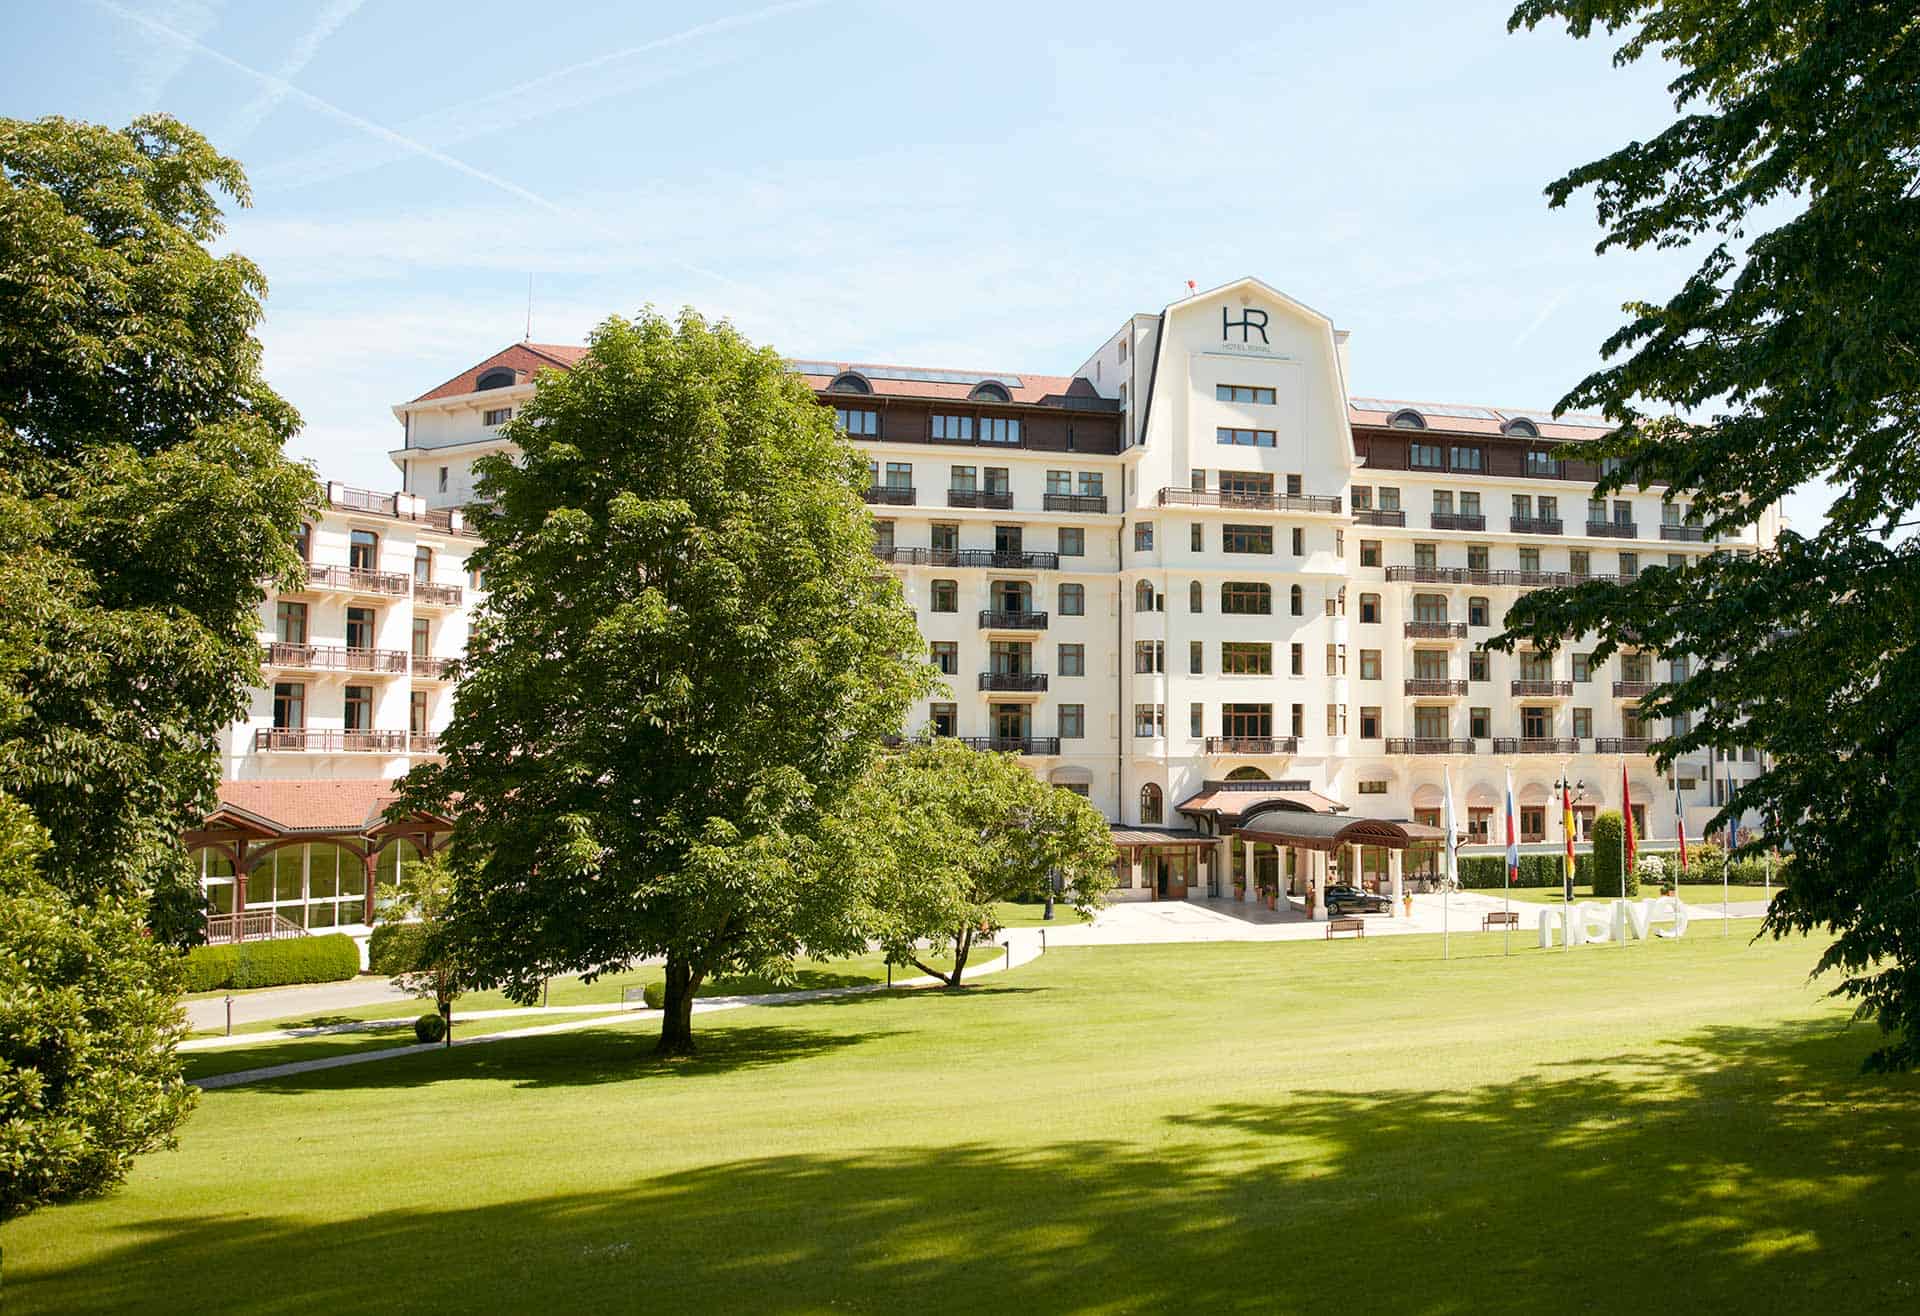 The Evian Resort Hotel Royal